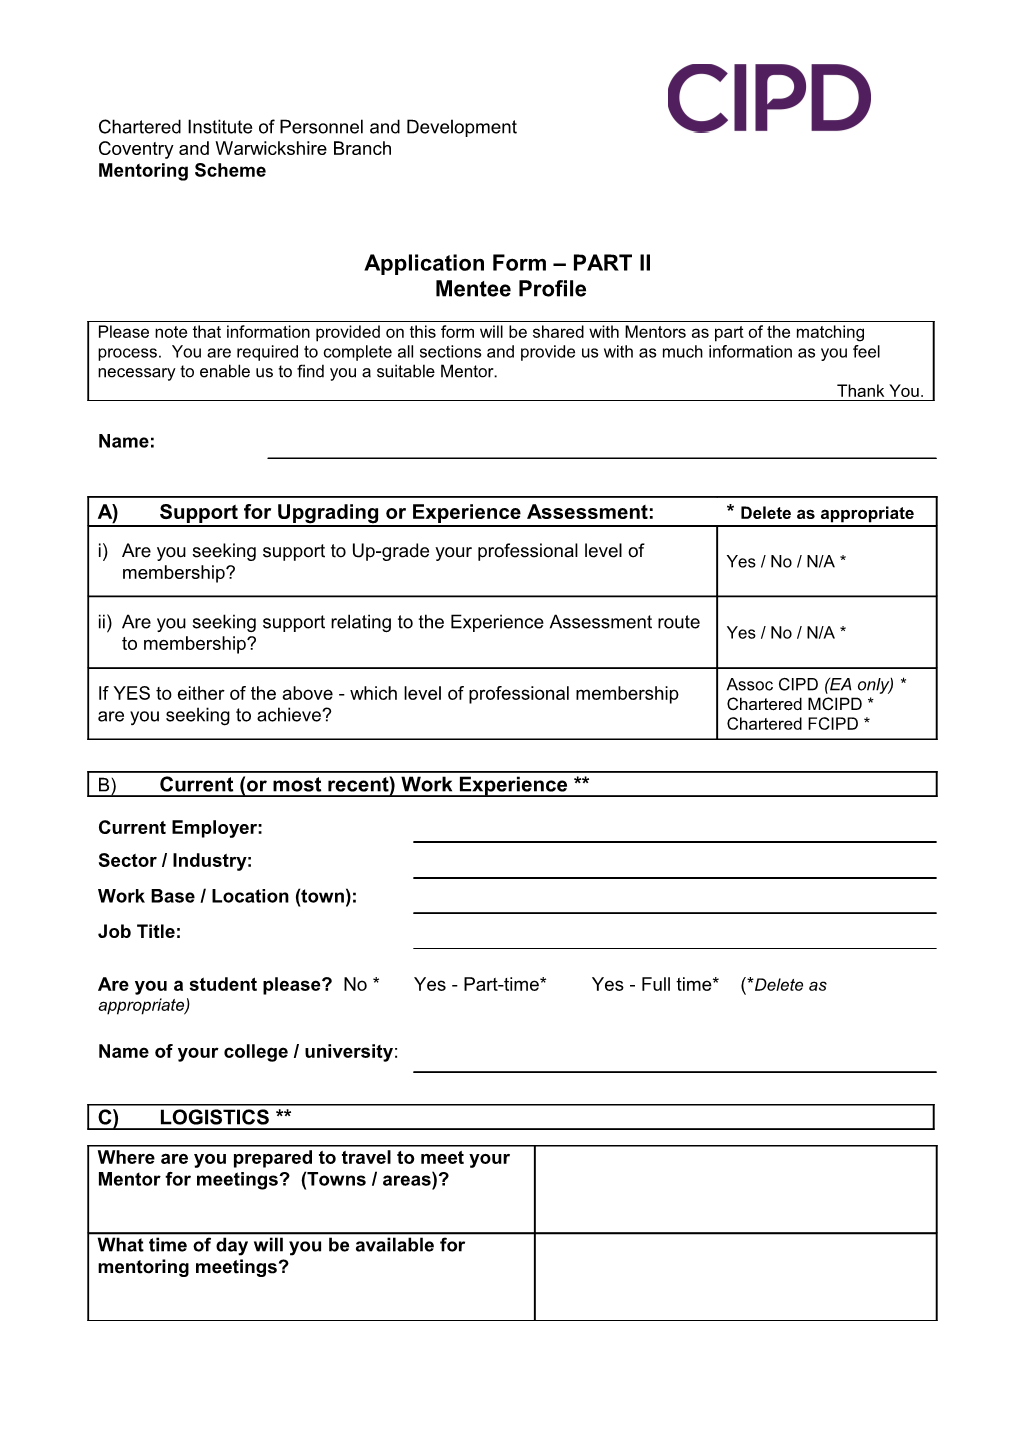 Application Form PART II